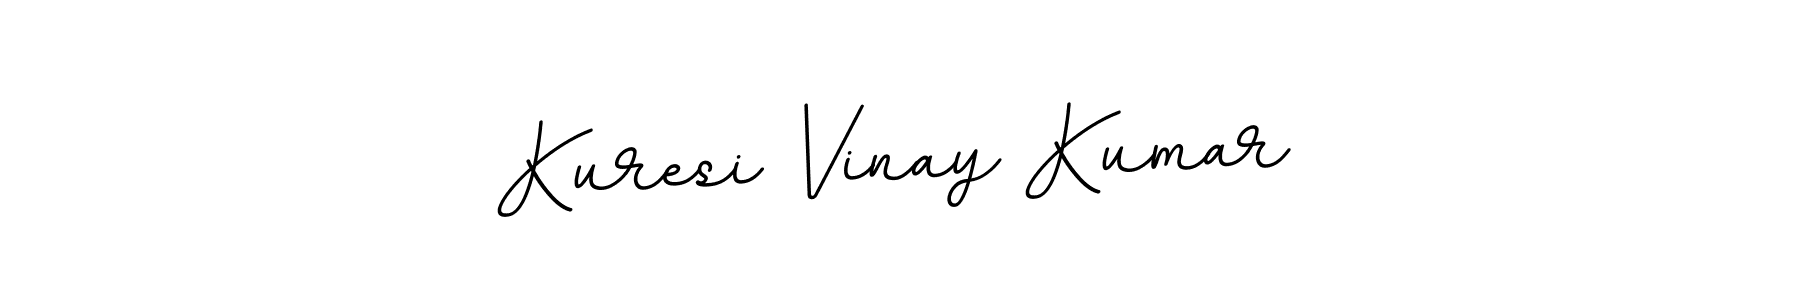 How to make Kuresi Vinay Kumar signature? BallpointsItalic-DORy9 is a professional autograph style. Create handwritten signature for Kuresi Vinay Kumar name. Kuresi Vinay Kumar signature style 11 images and pictures png